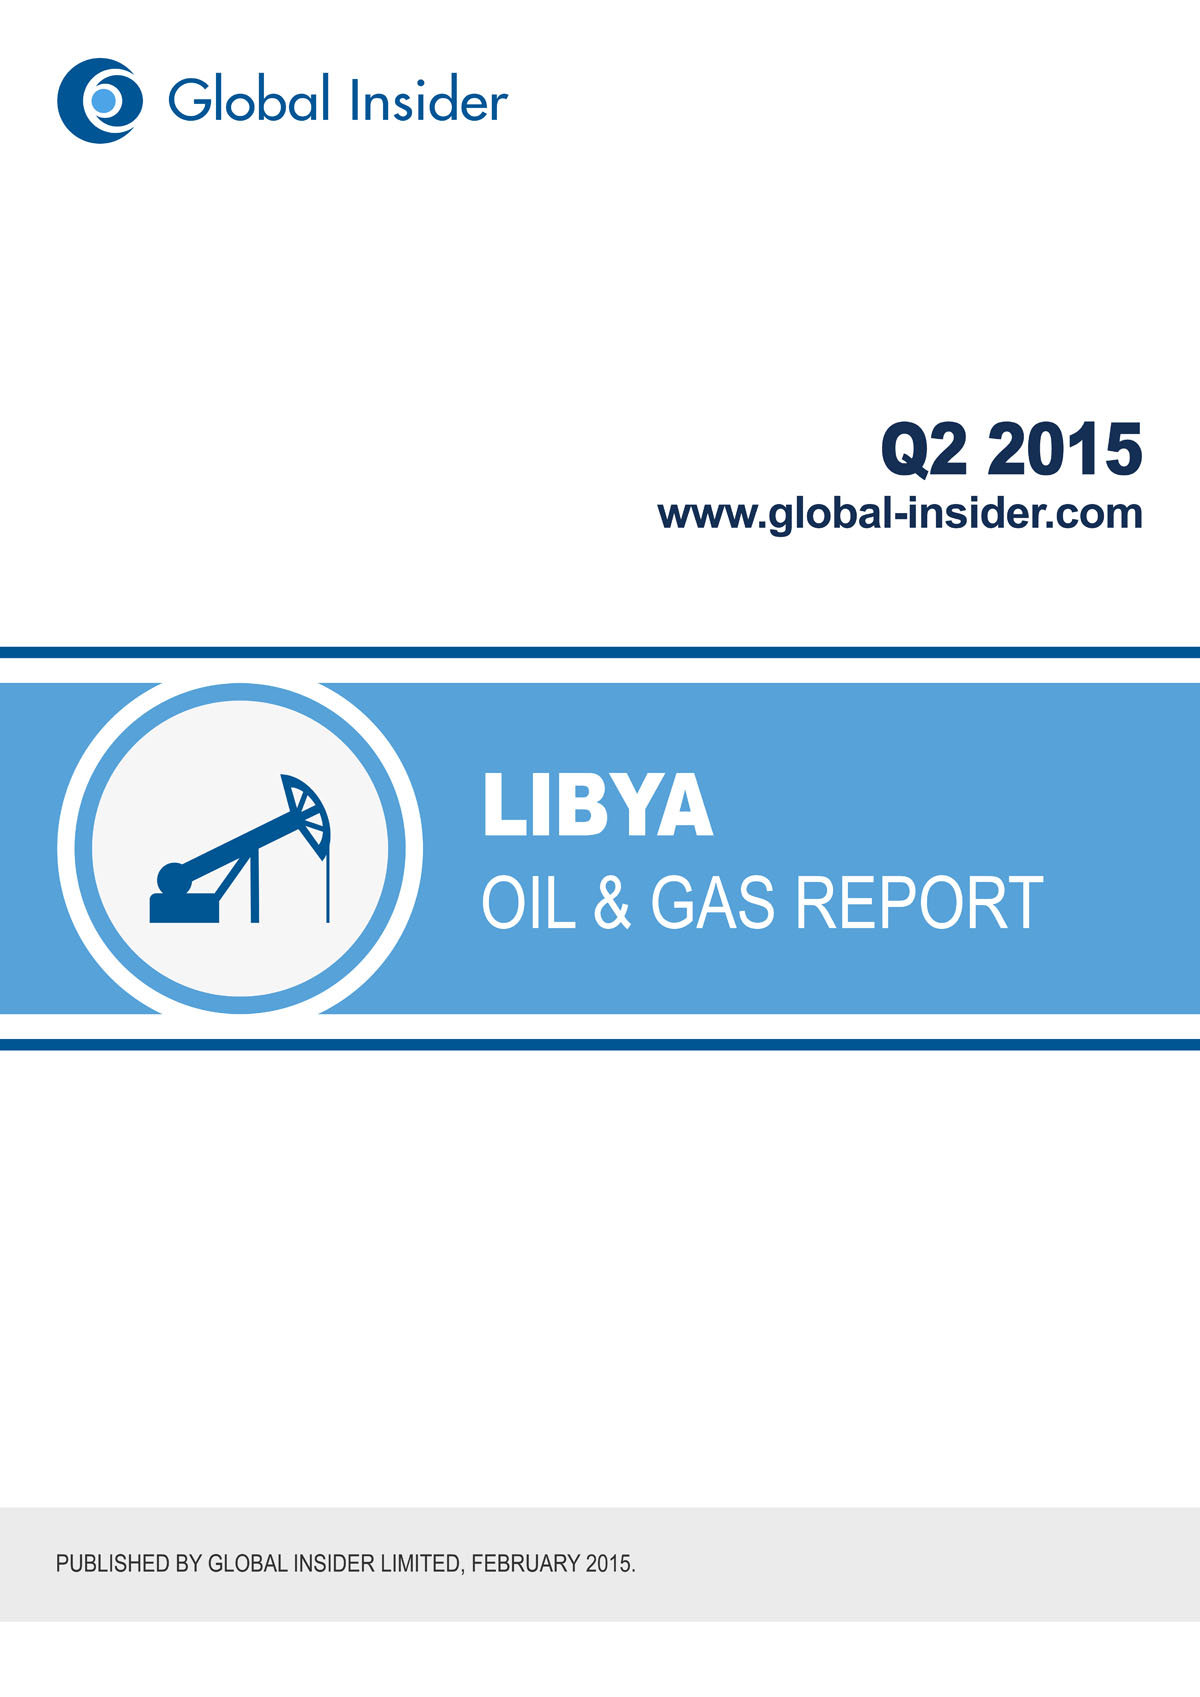 Libya Oil & Gas Report